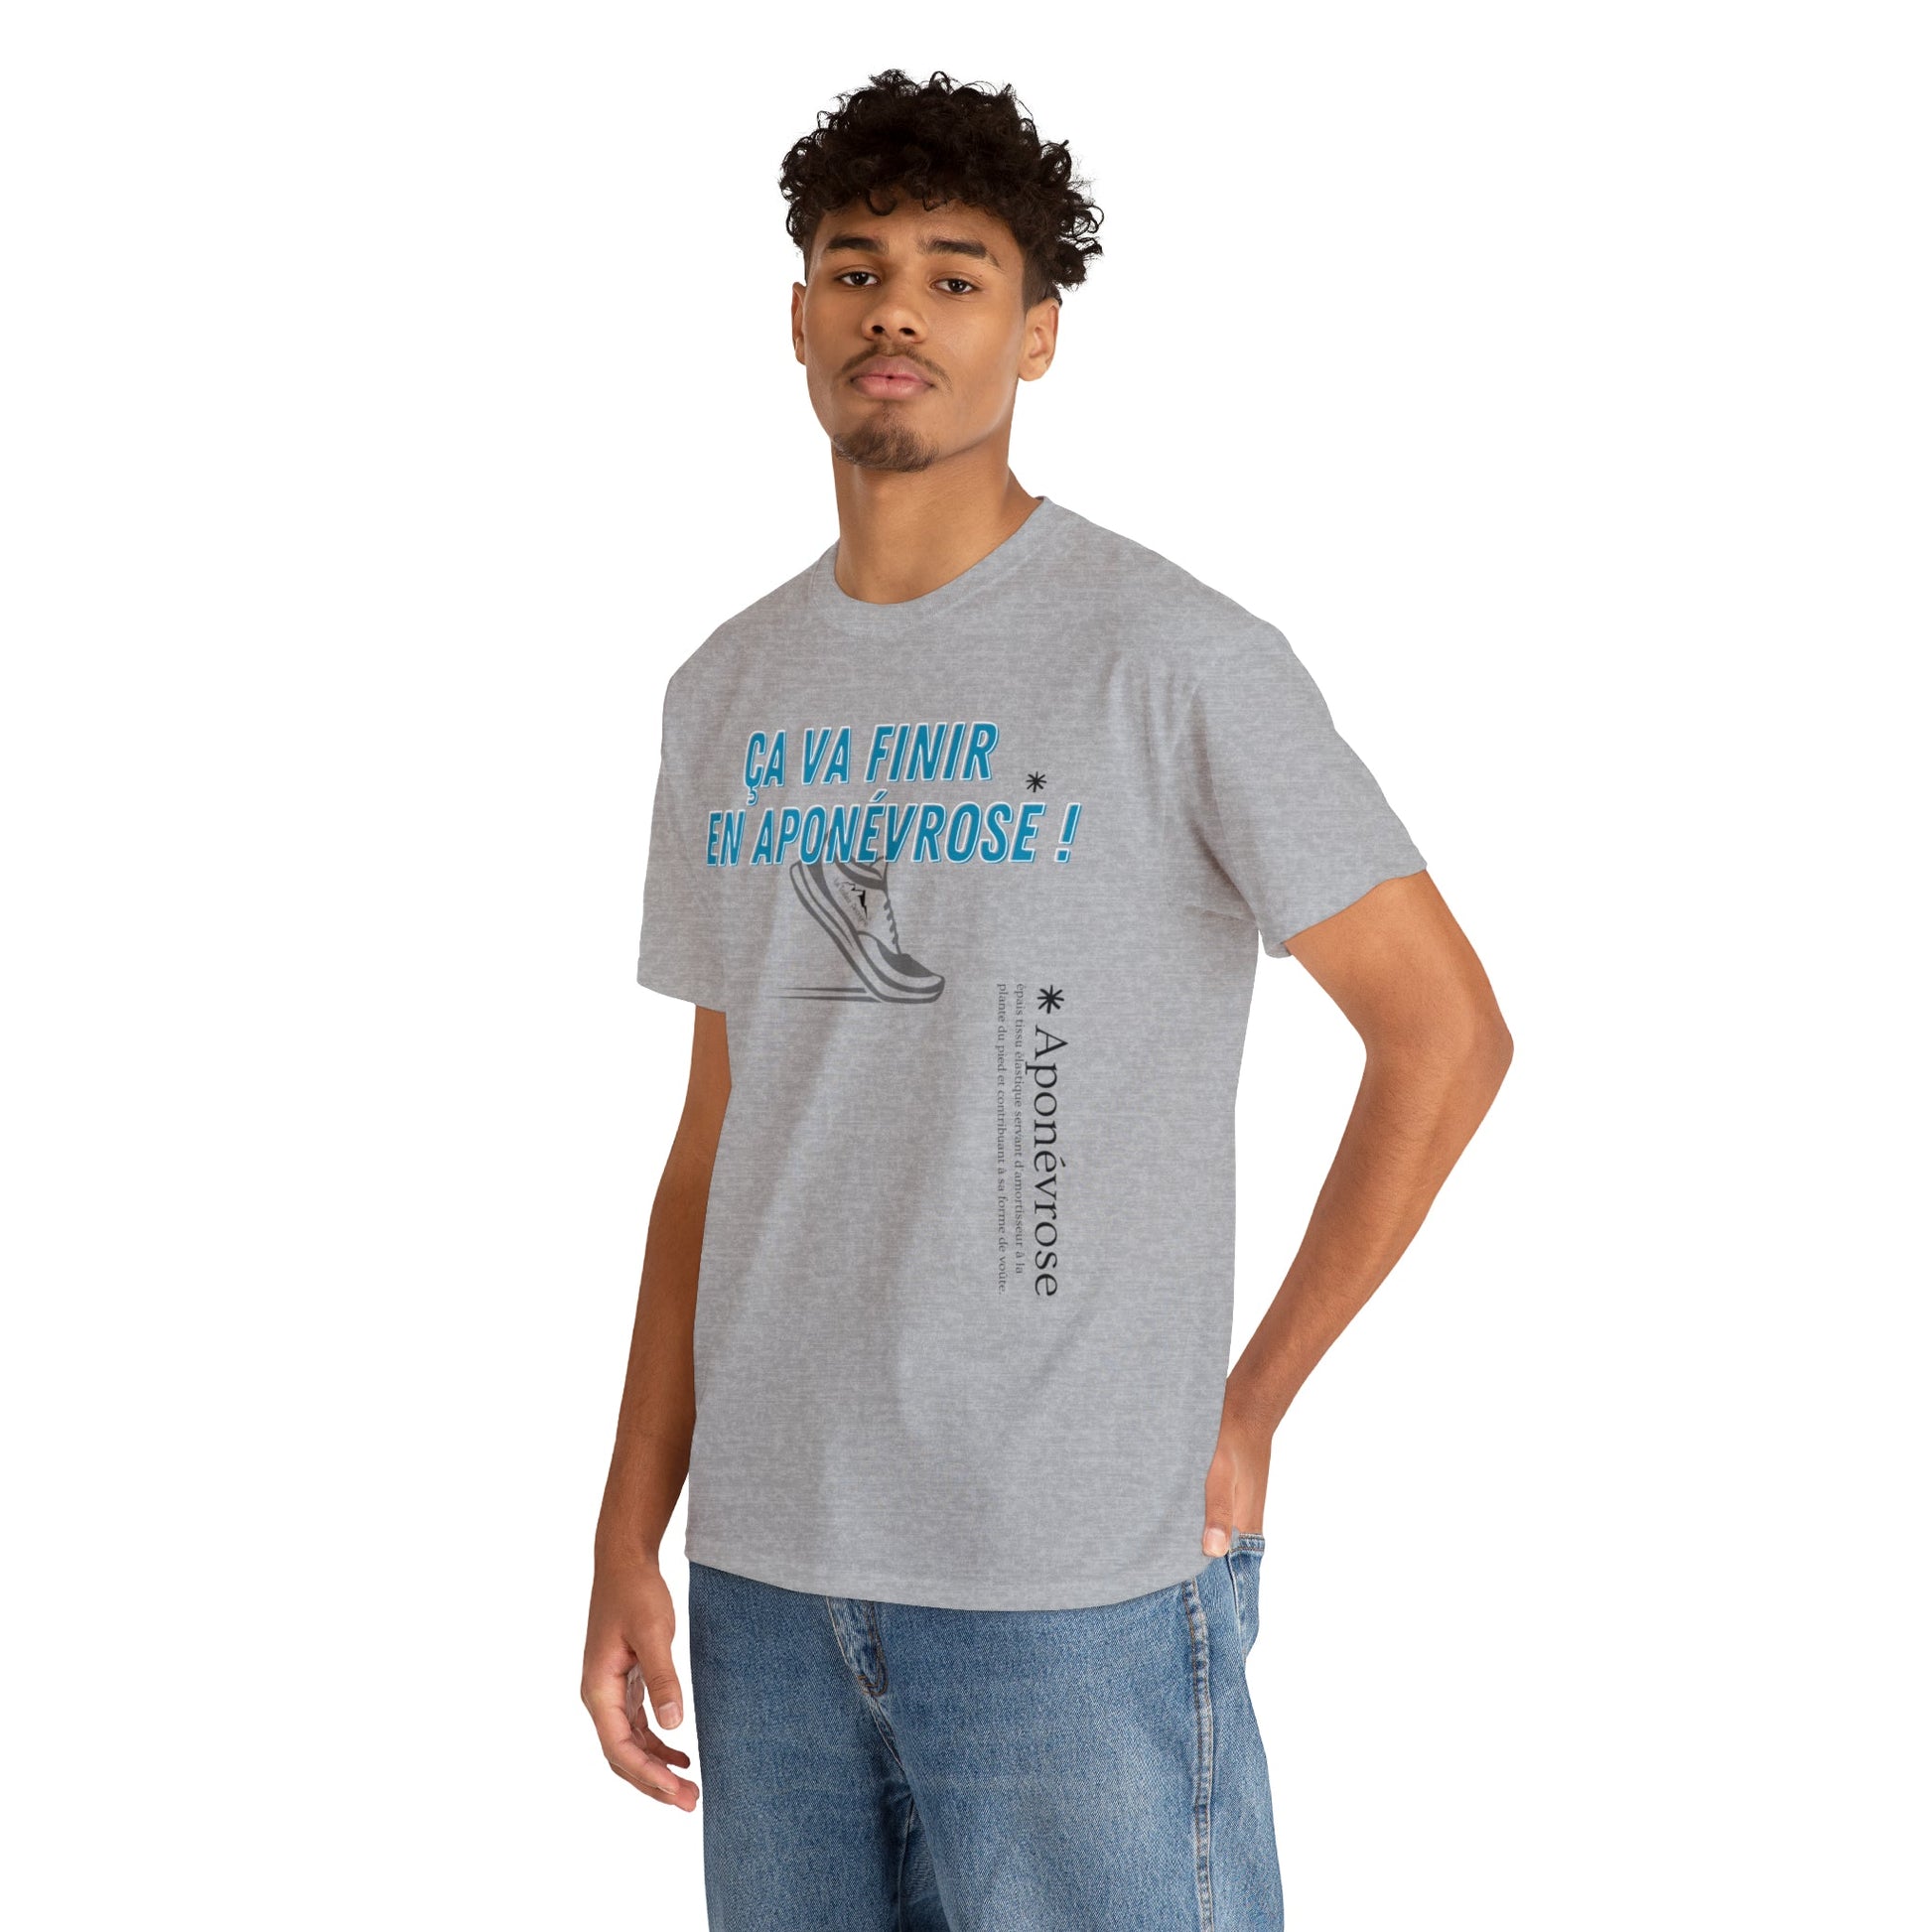 T-Shirt Basic - Homme - Collection "Aponévrose" (510) - Le Traileur Anonyme